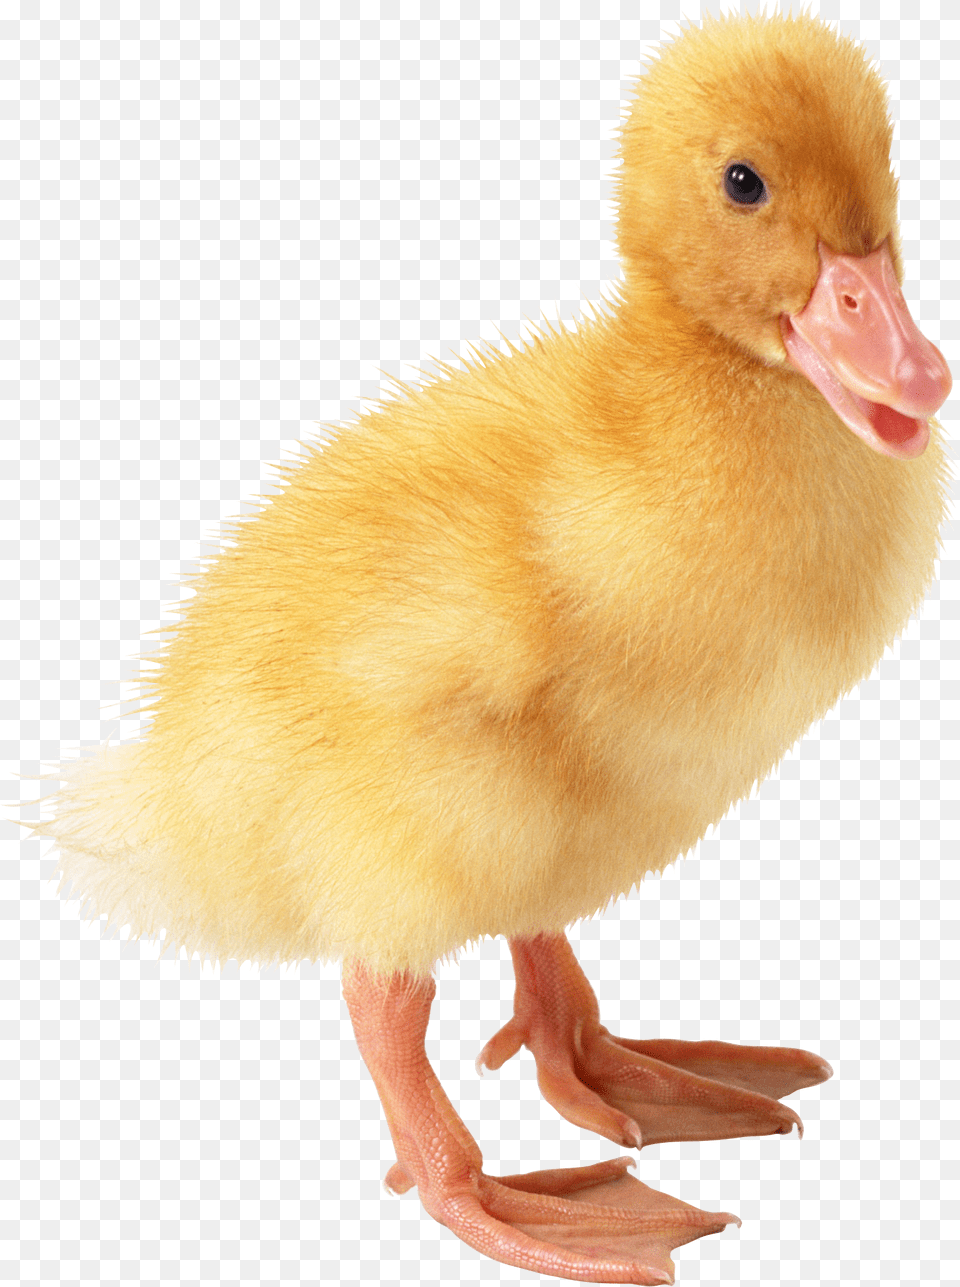 Duck, Animal, Bird, Chicken, Fowl Png Image